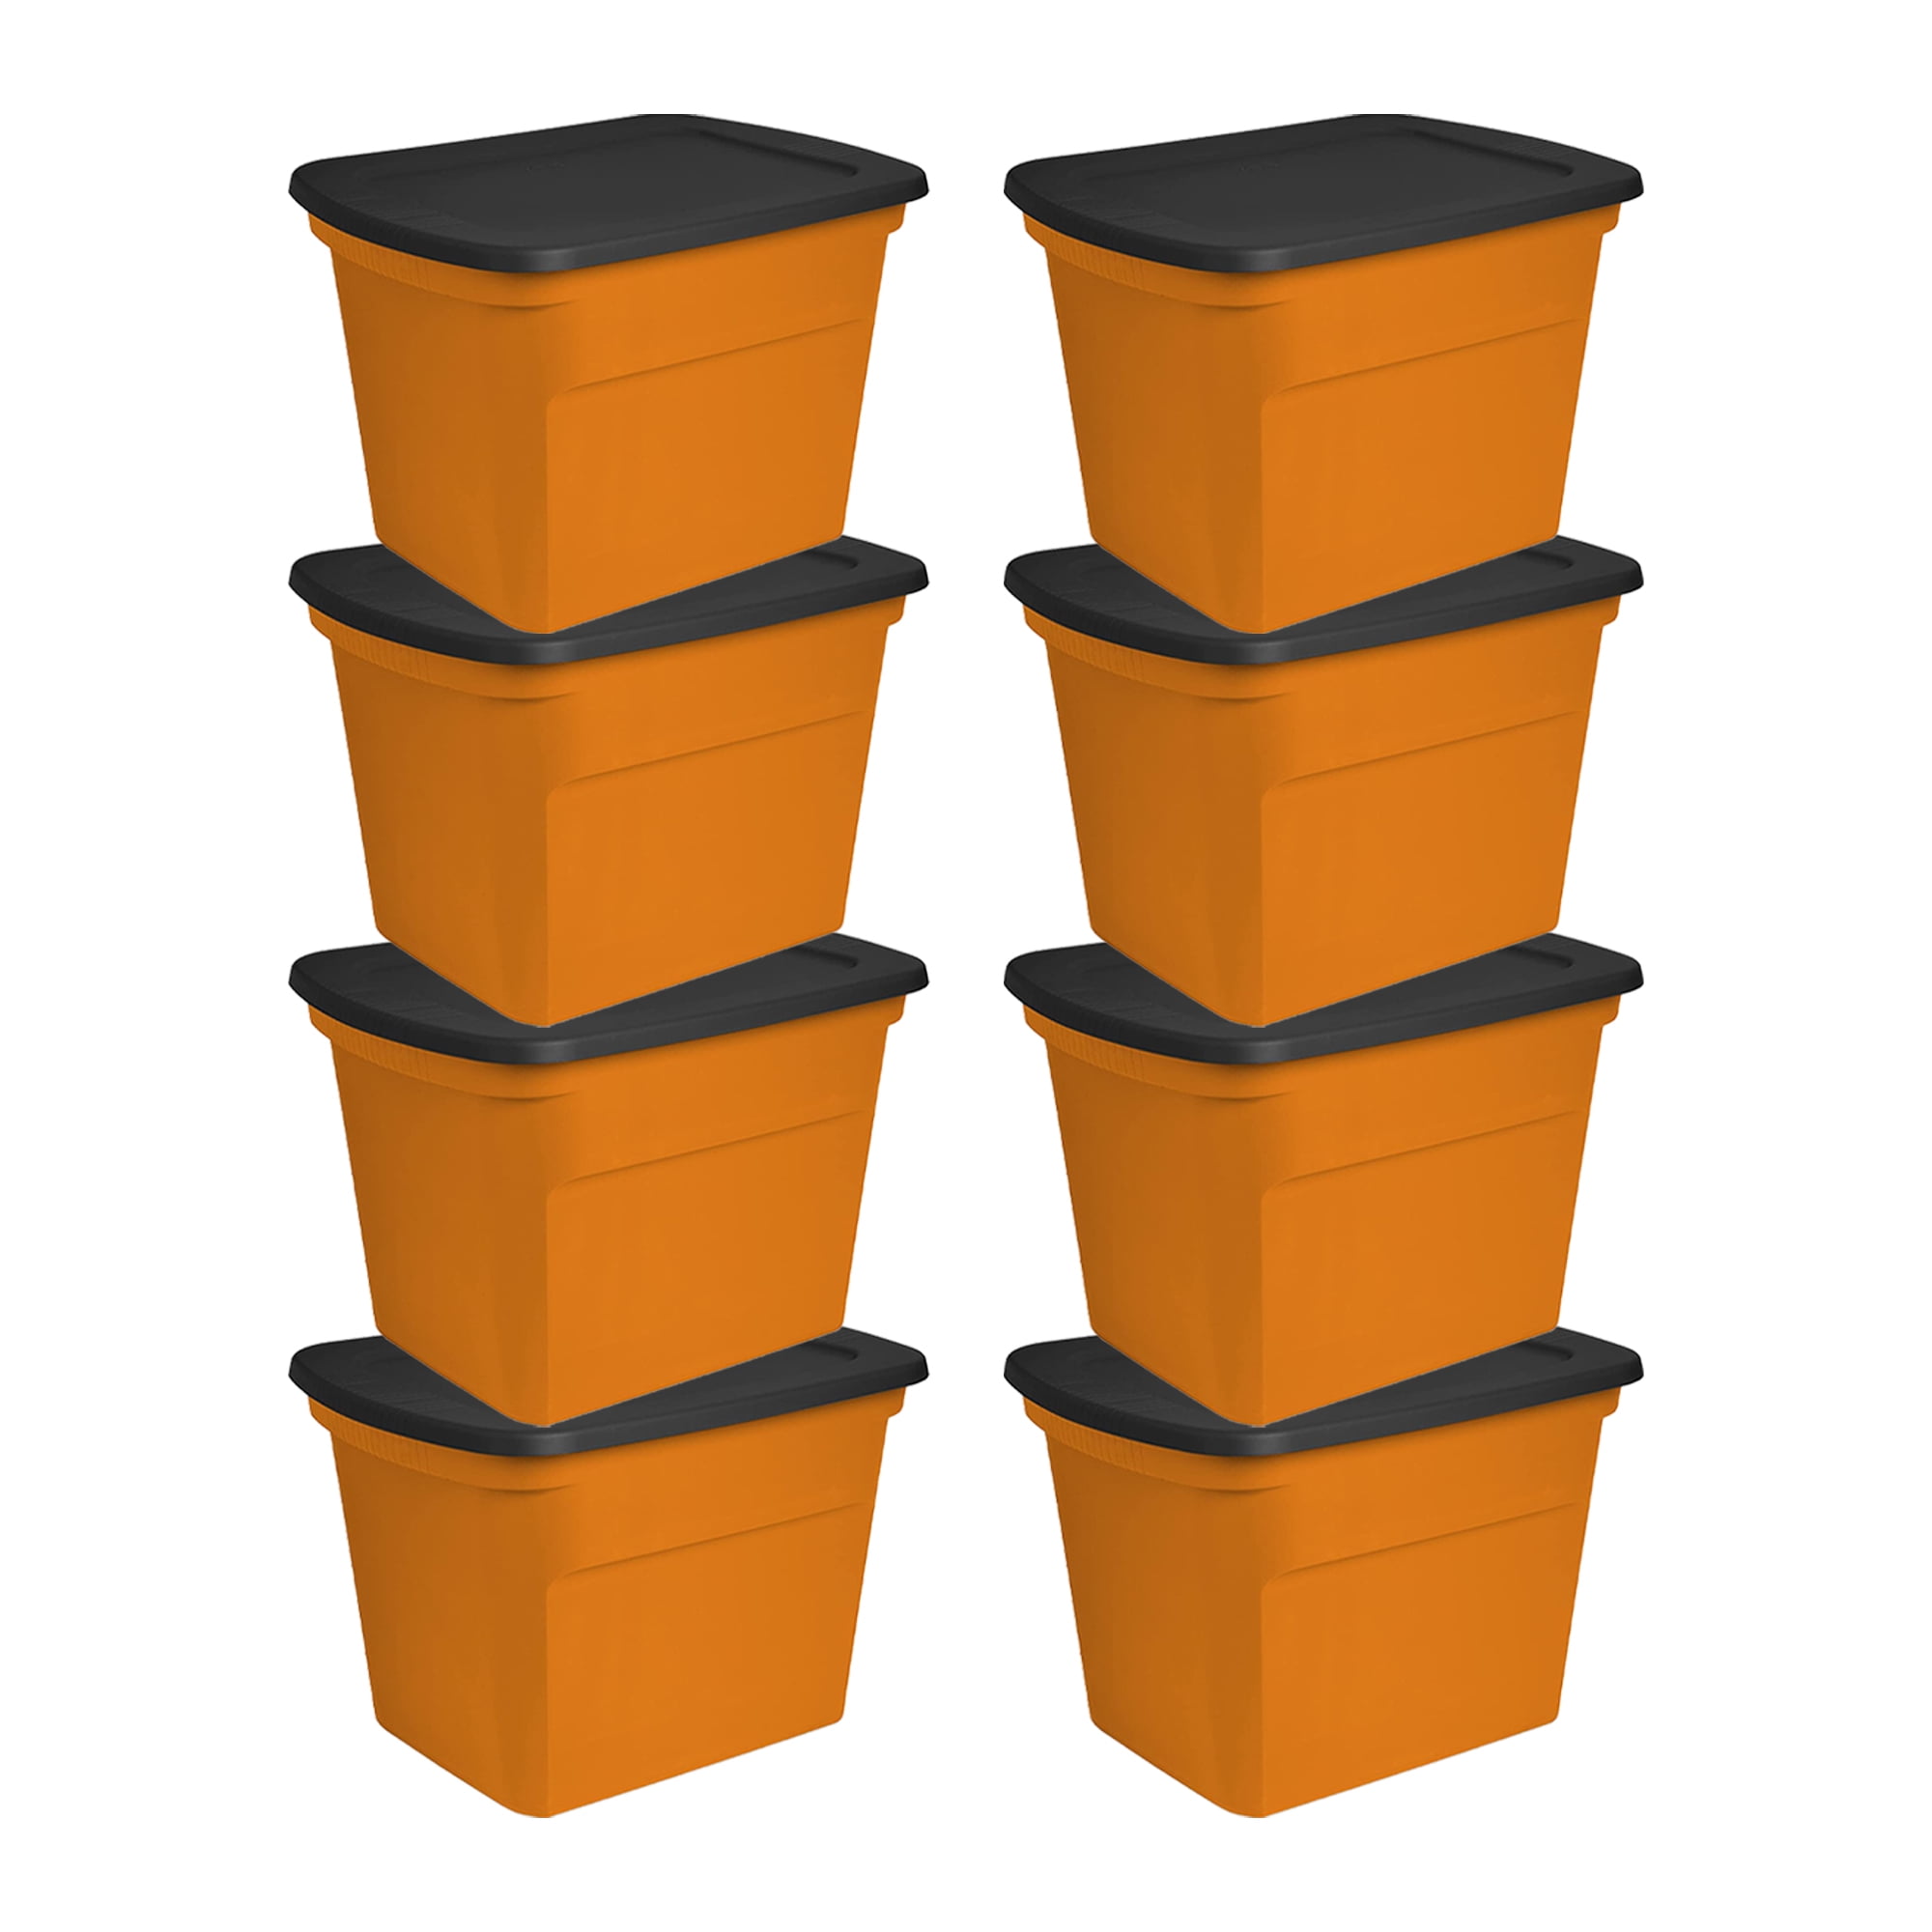 Teacher Created Resources TCR20412 Plastic Storage Bin Orange - Large